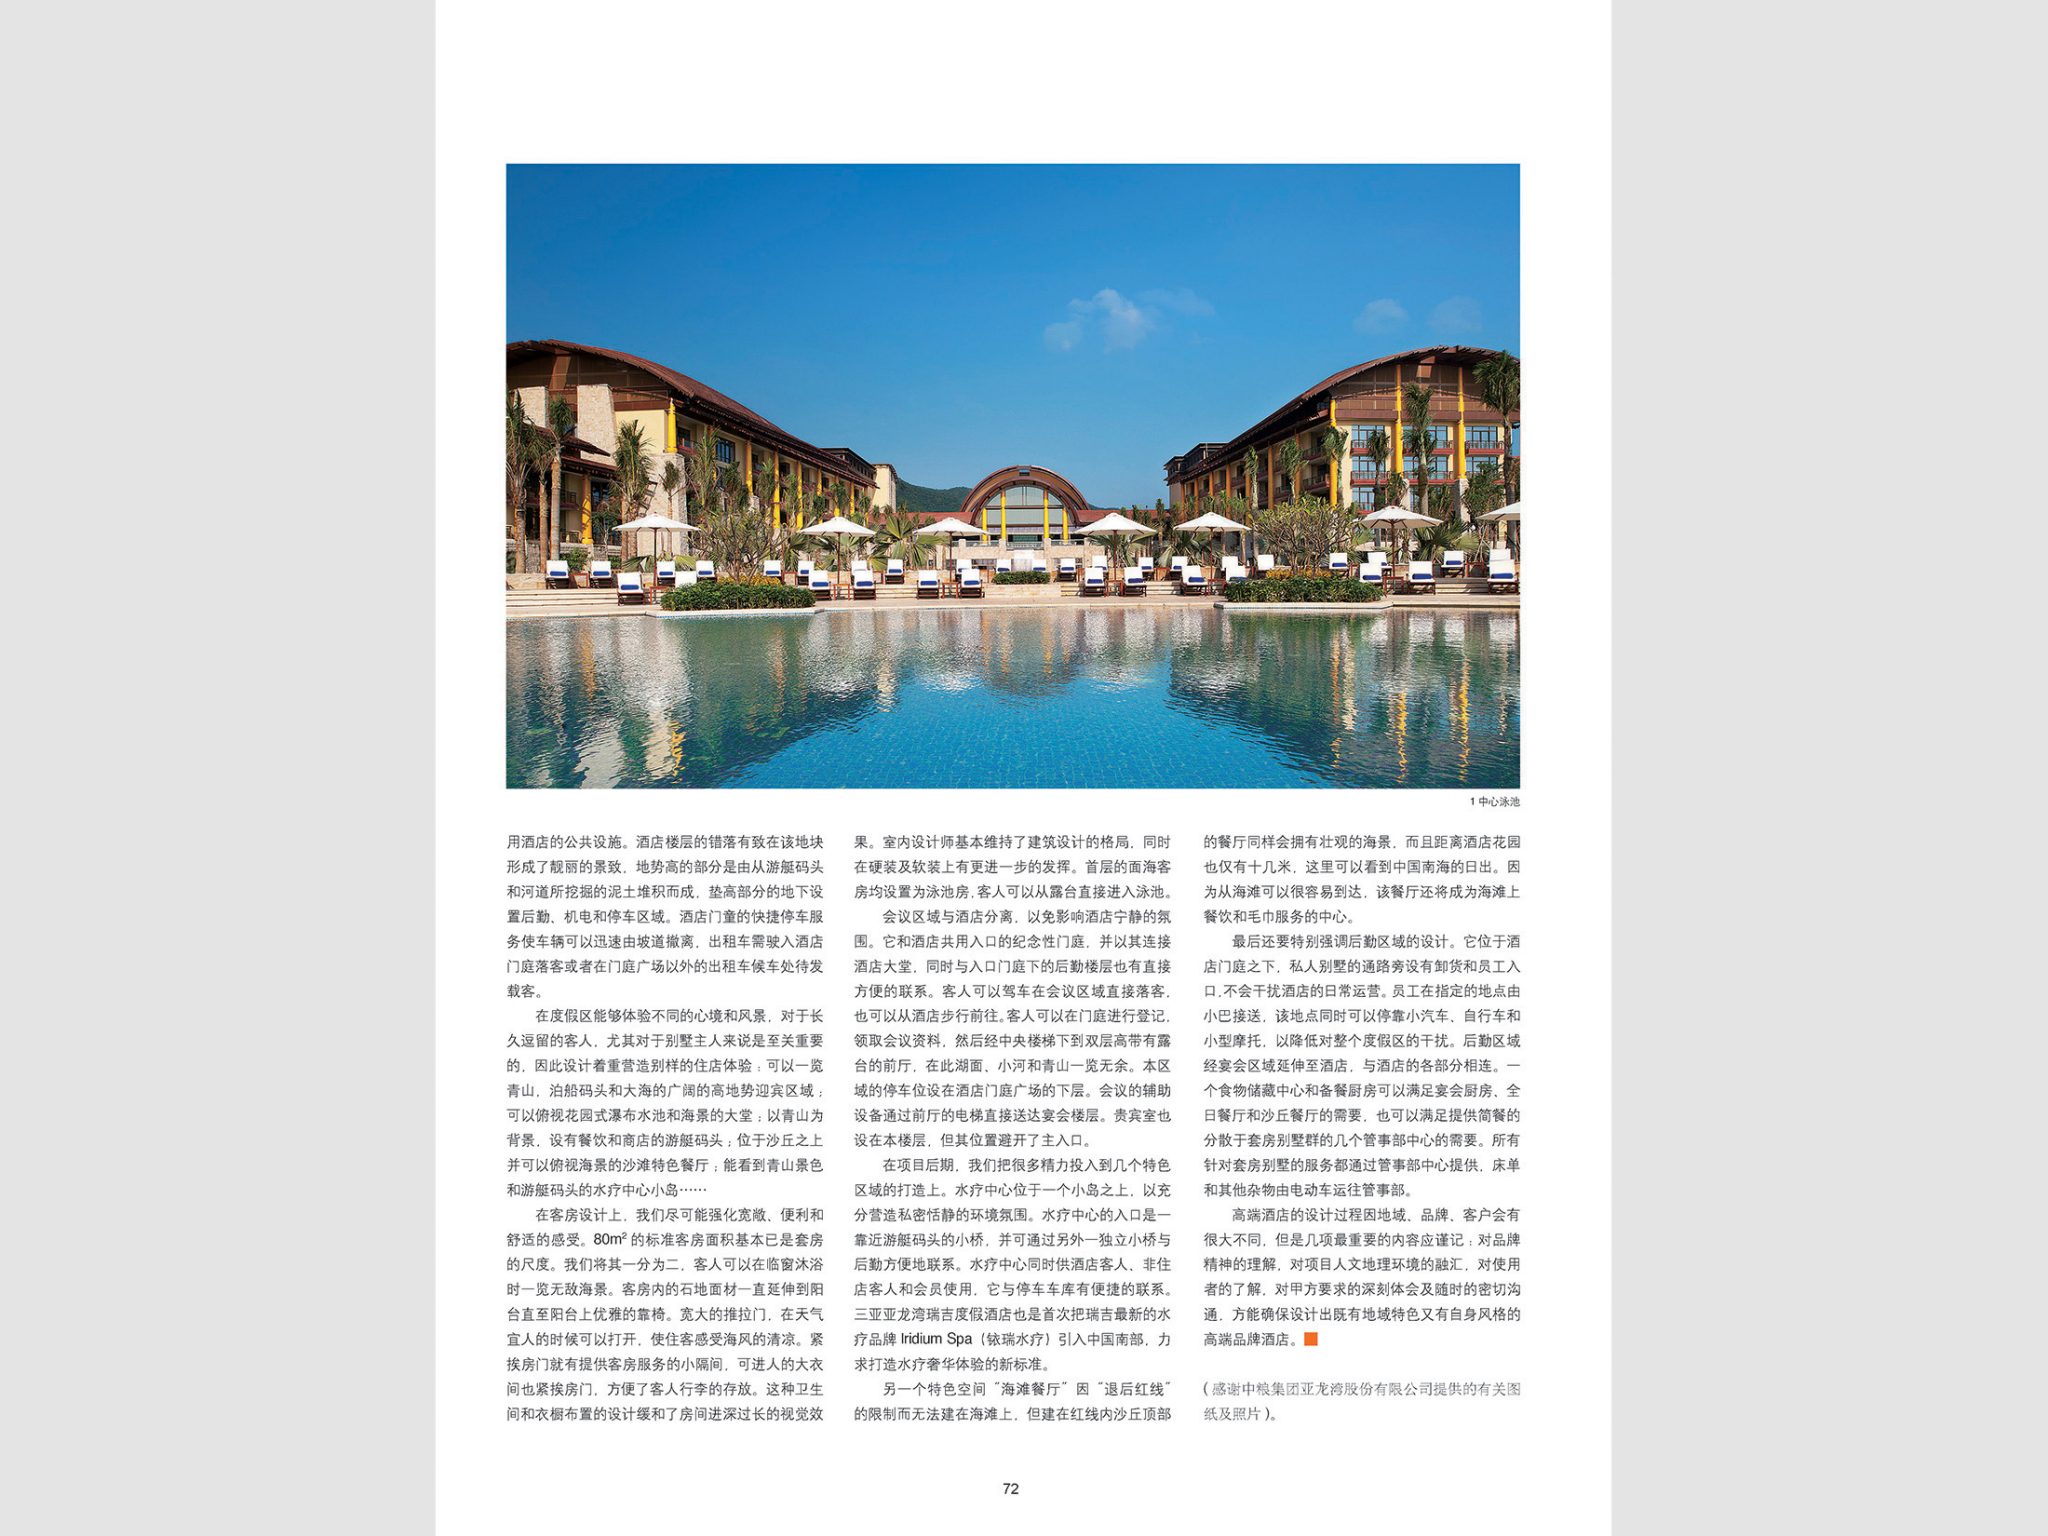 Urbanism and Architecture: St. Regis Hotel, Sanya, China